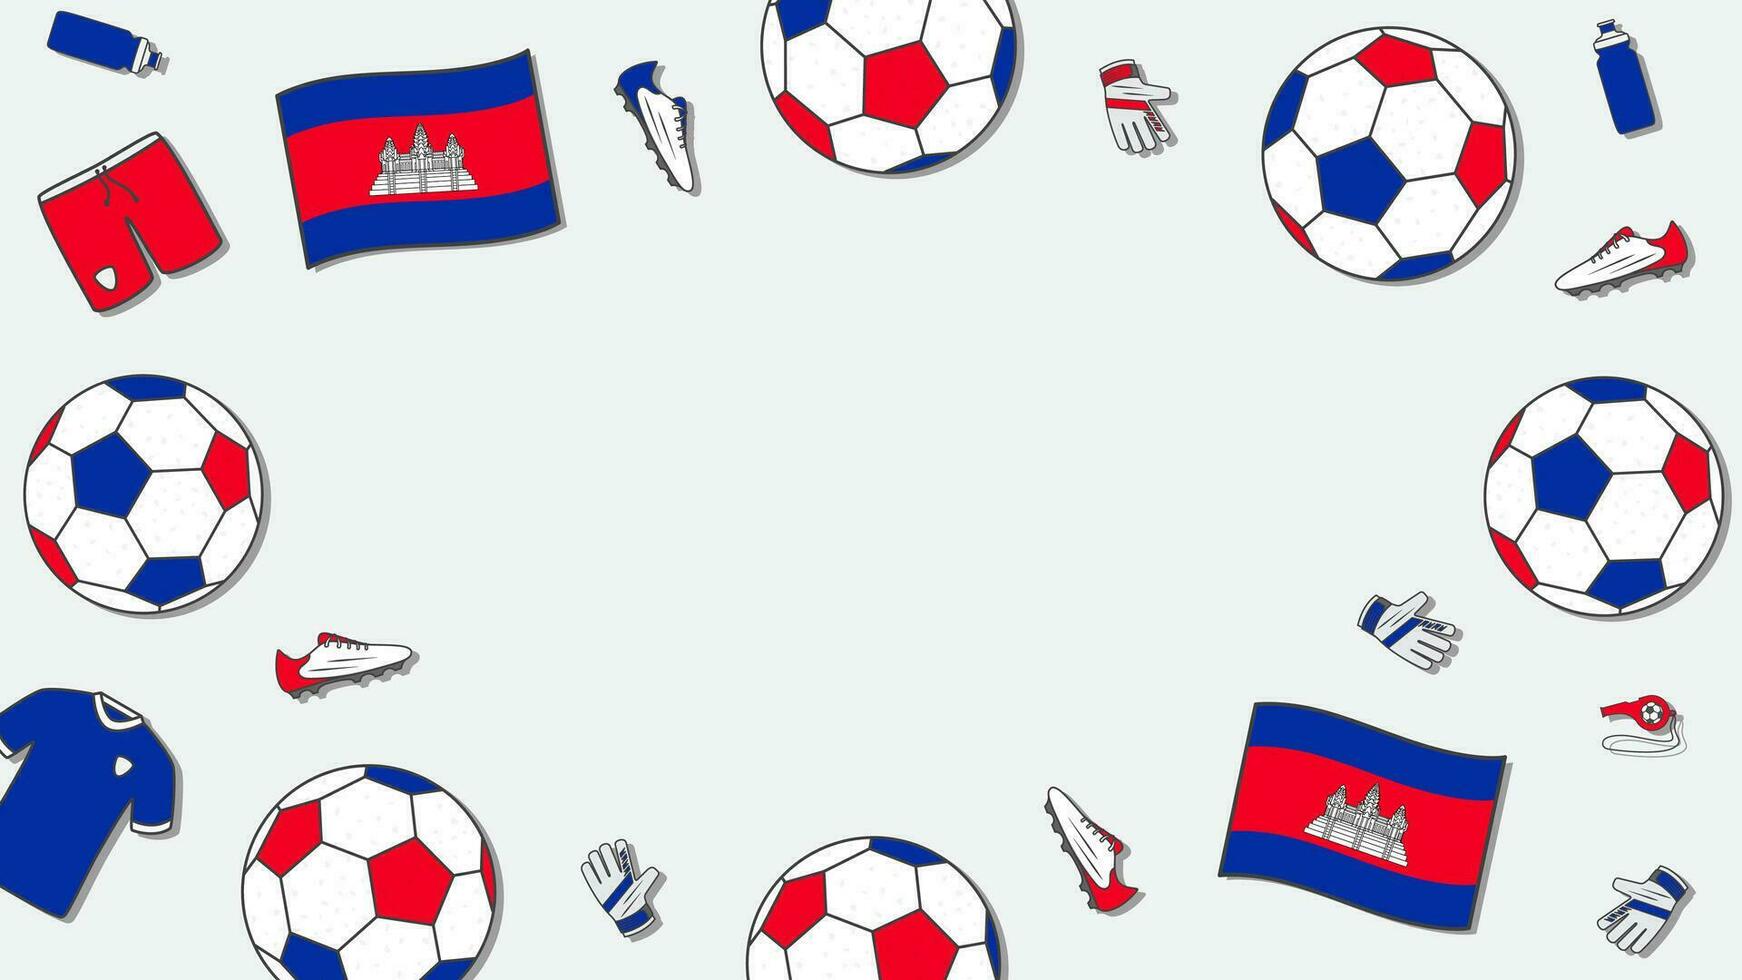 Football Background Design Template. Football Cartoon Vector Illustration. Tournament In Cambodia